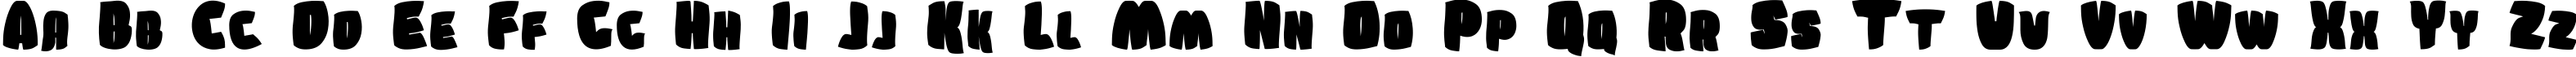 Пример написания английского алфавита шрифтом Sumkin freetype MRfrukta 2010